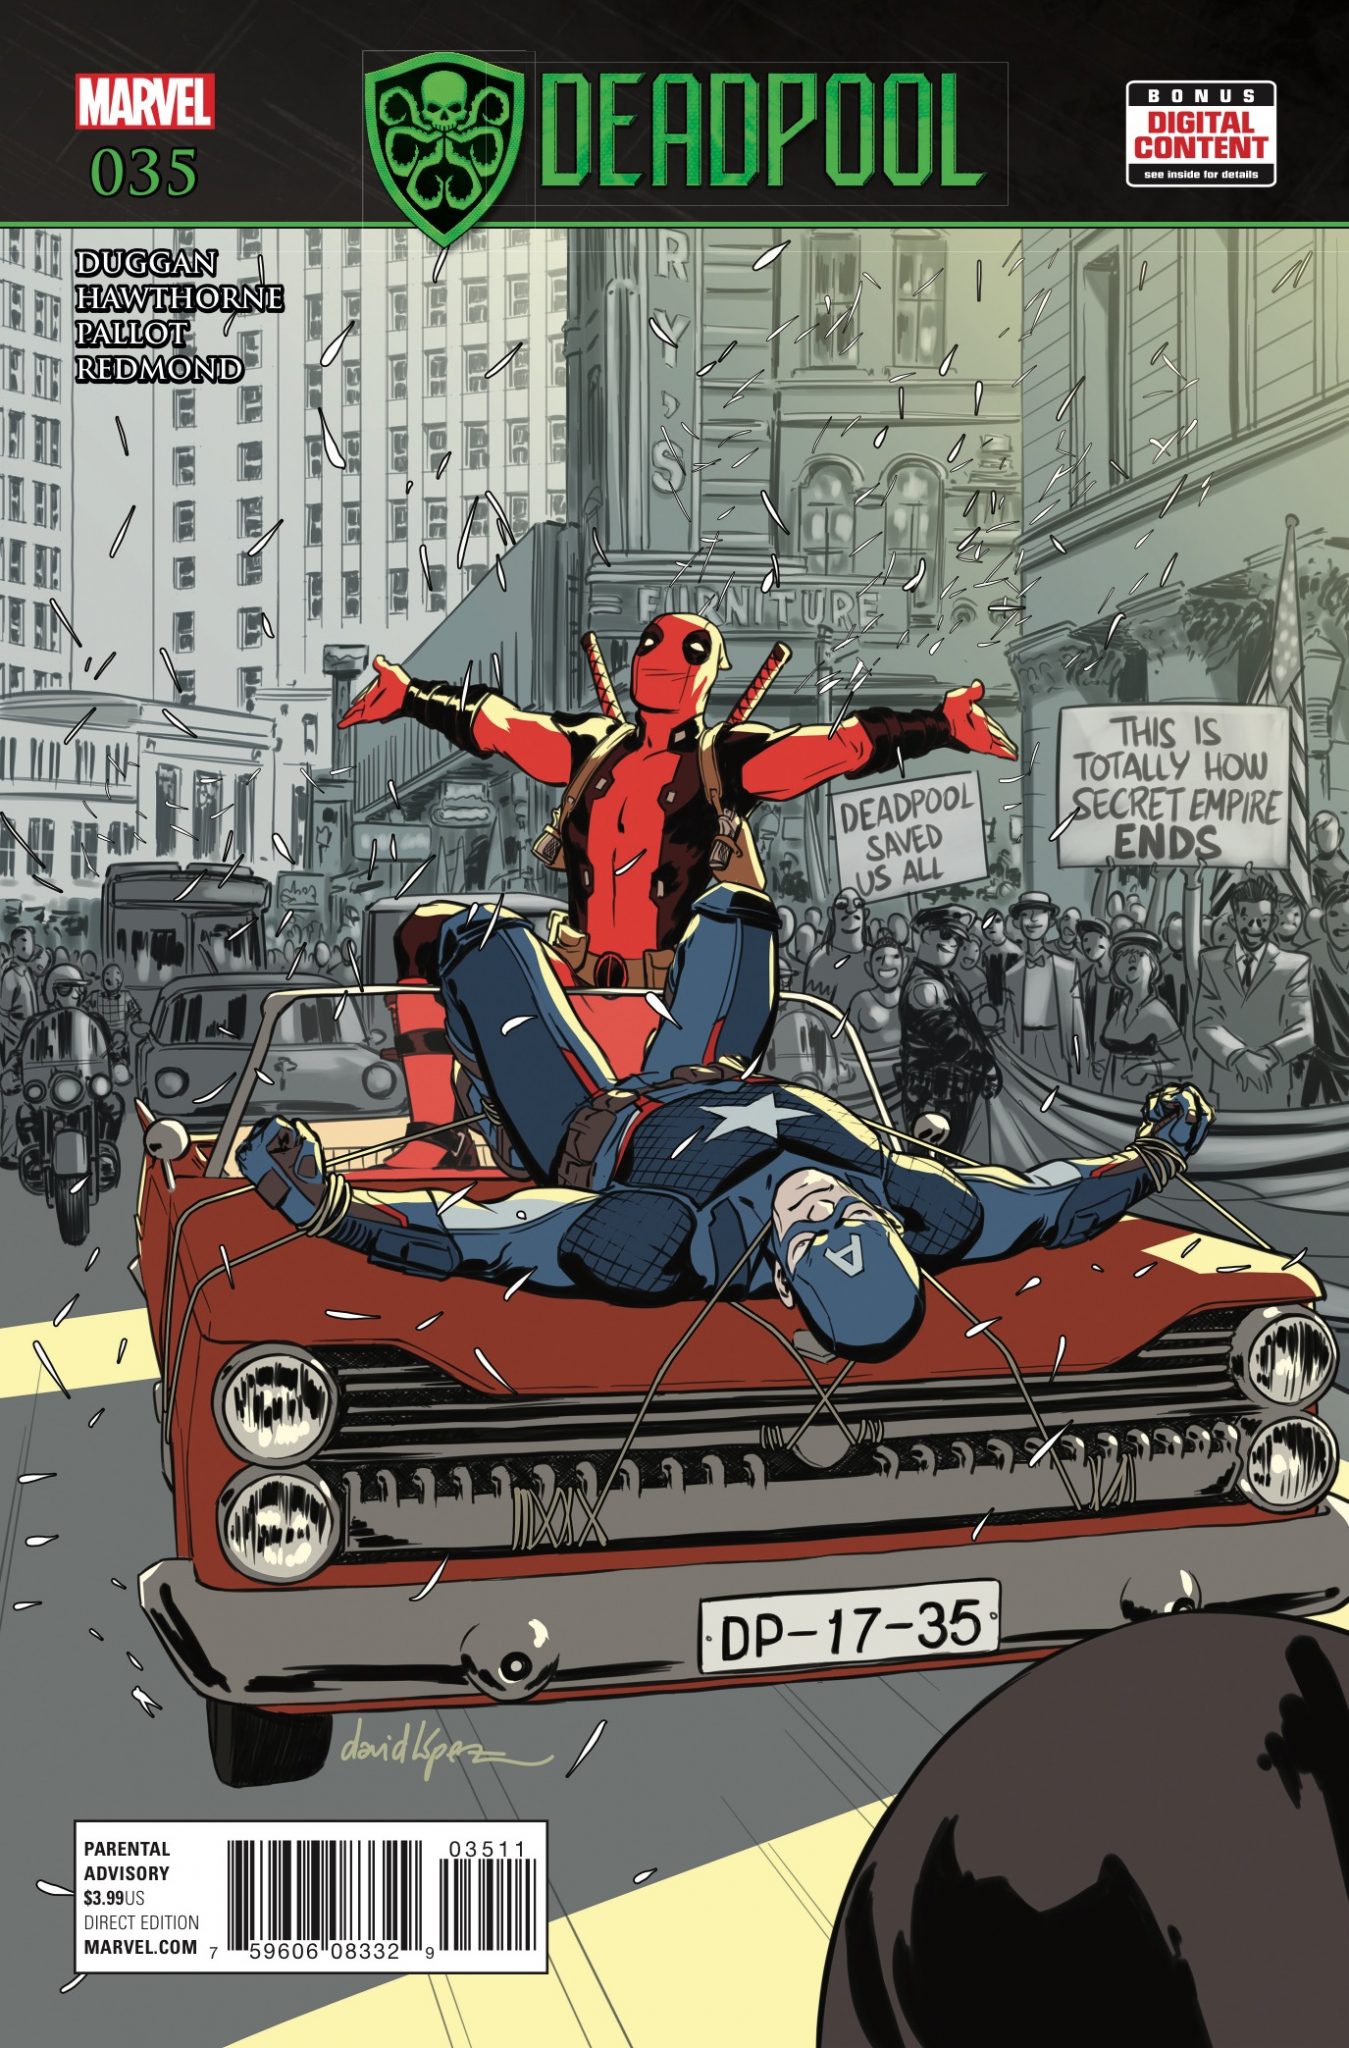 Deadpool #35 Review